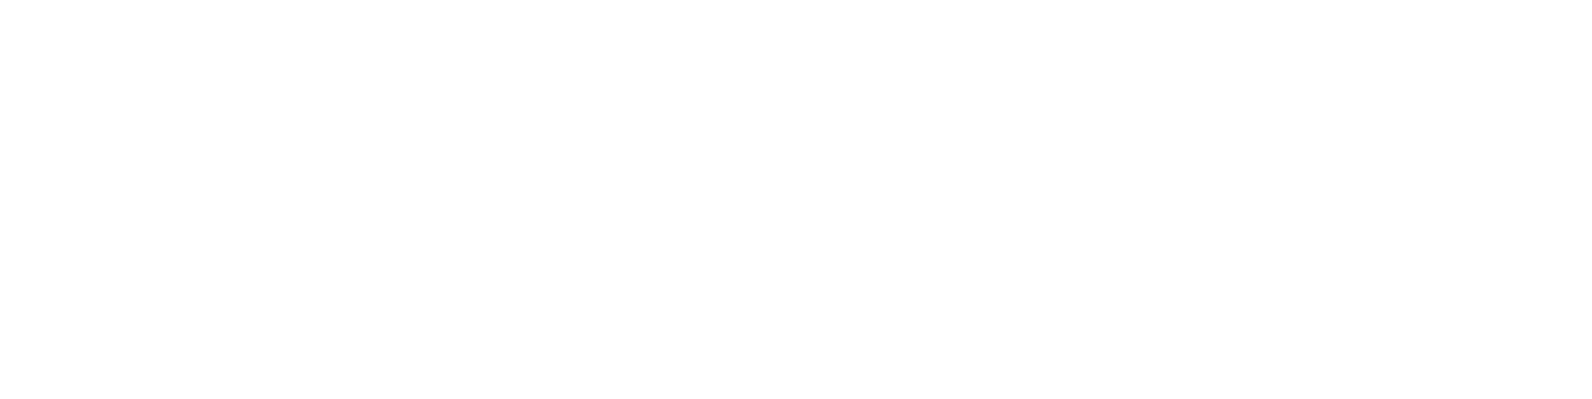 QuantaSing Group Logo groß für dunkle Hintergründe (transparentes PNG)